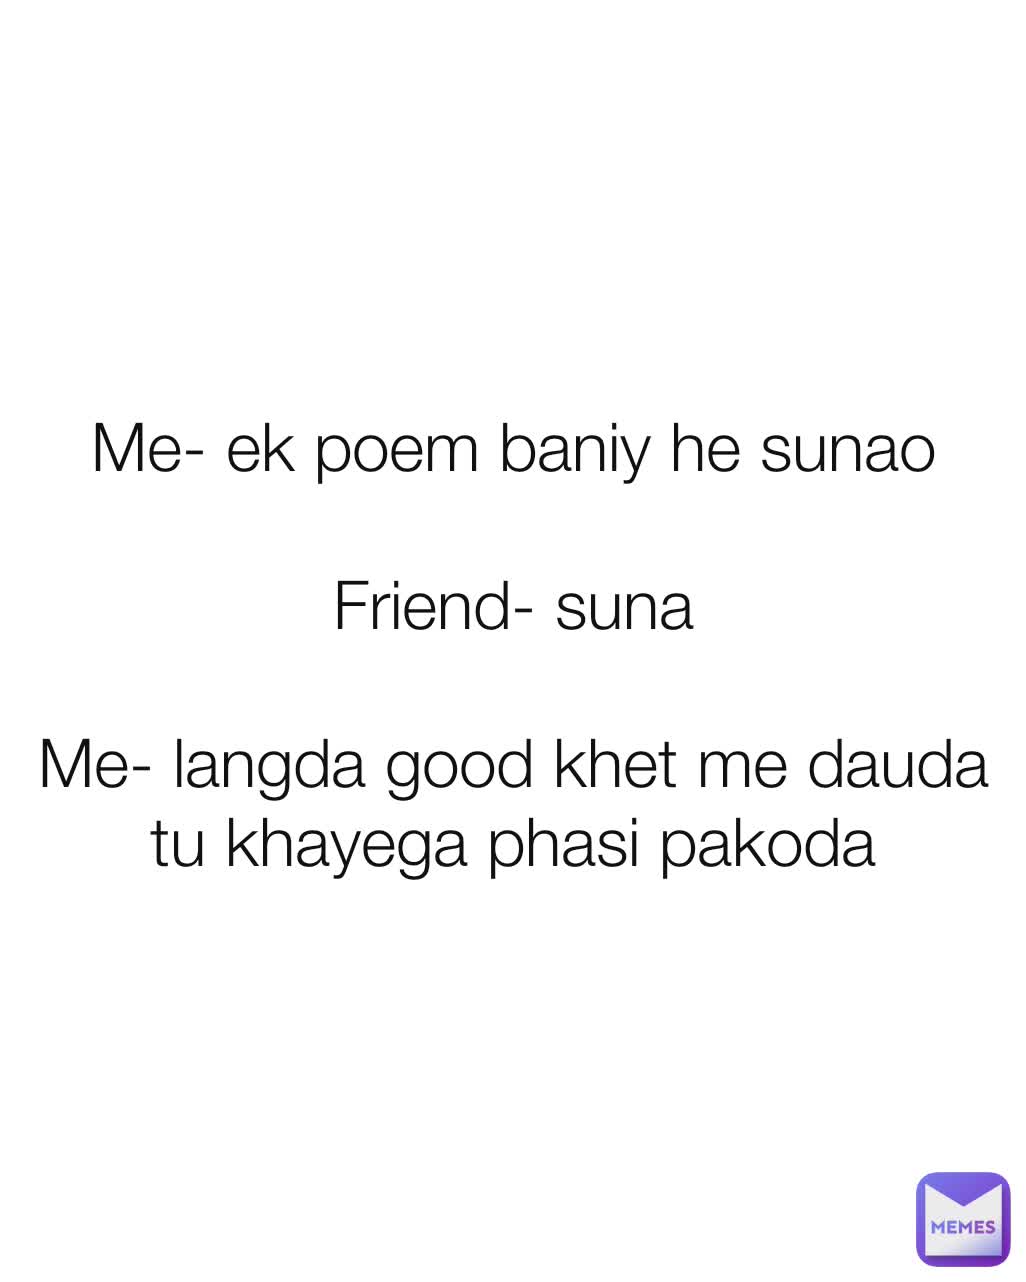 Me- ek poem baniy he sunao

Friend- suna

Me- langda good khet me dauda
tu khayega phasi pakoda